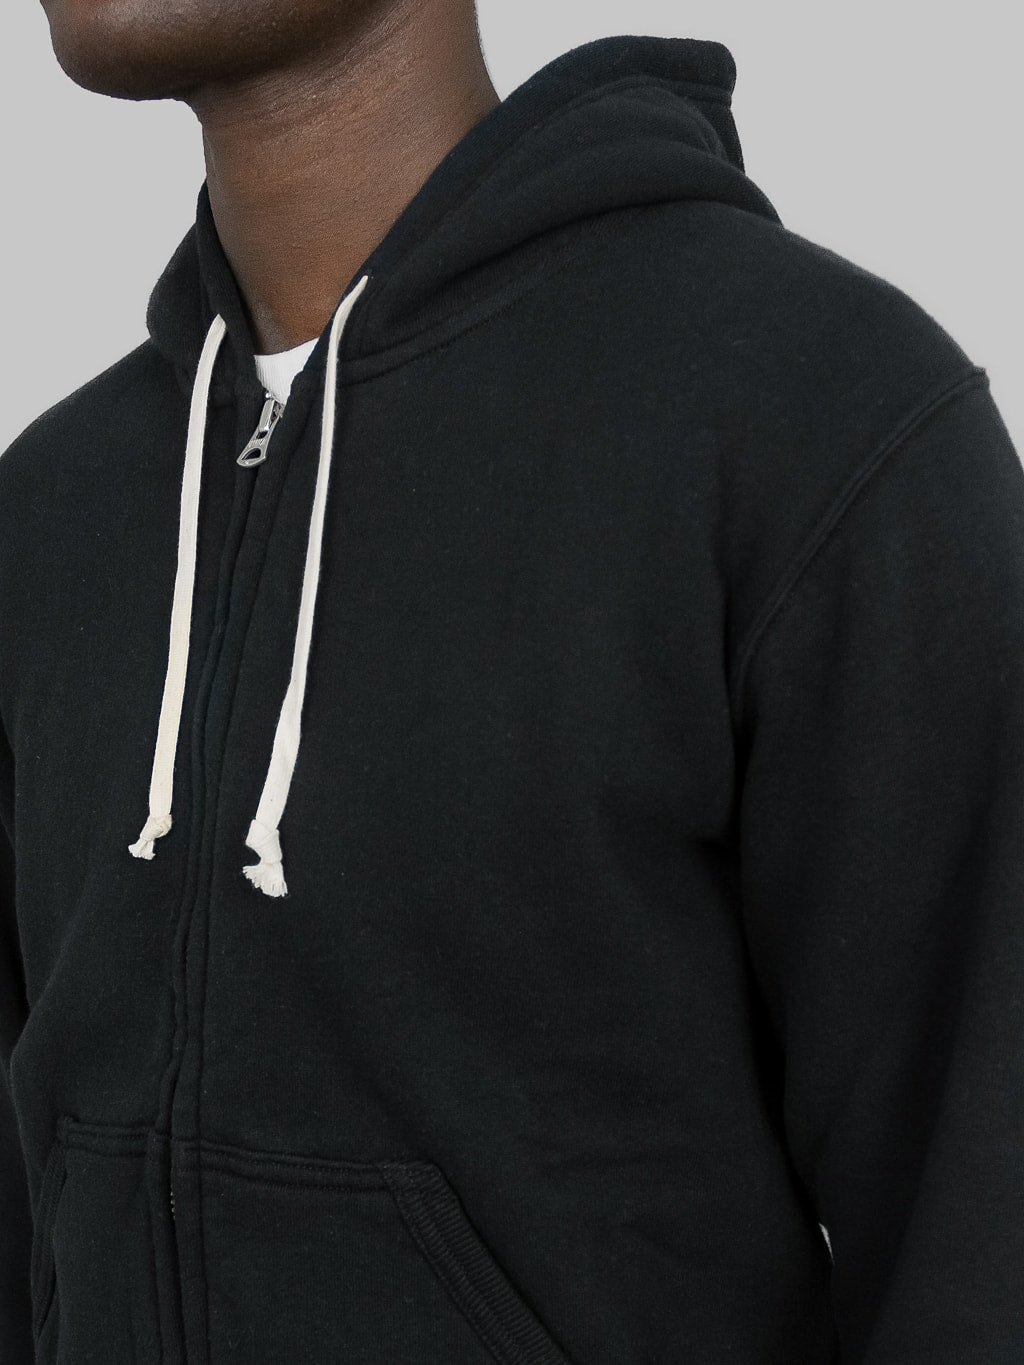 the flat head thermal zip hoodie black collar chest